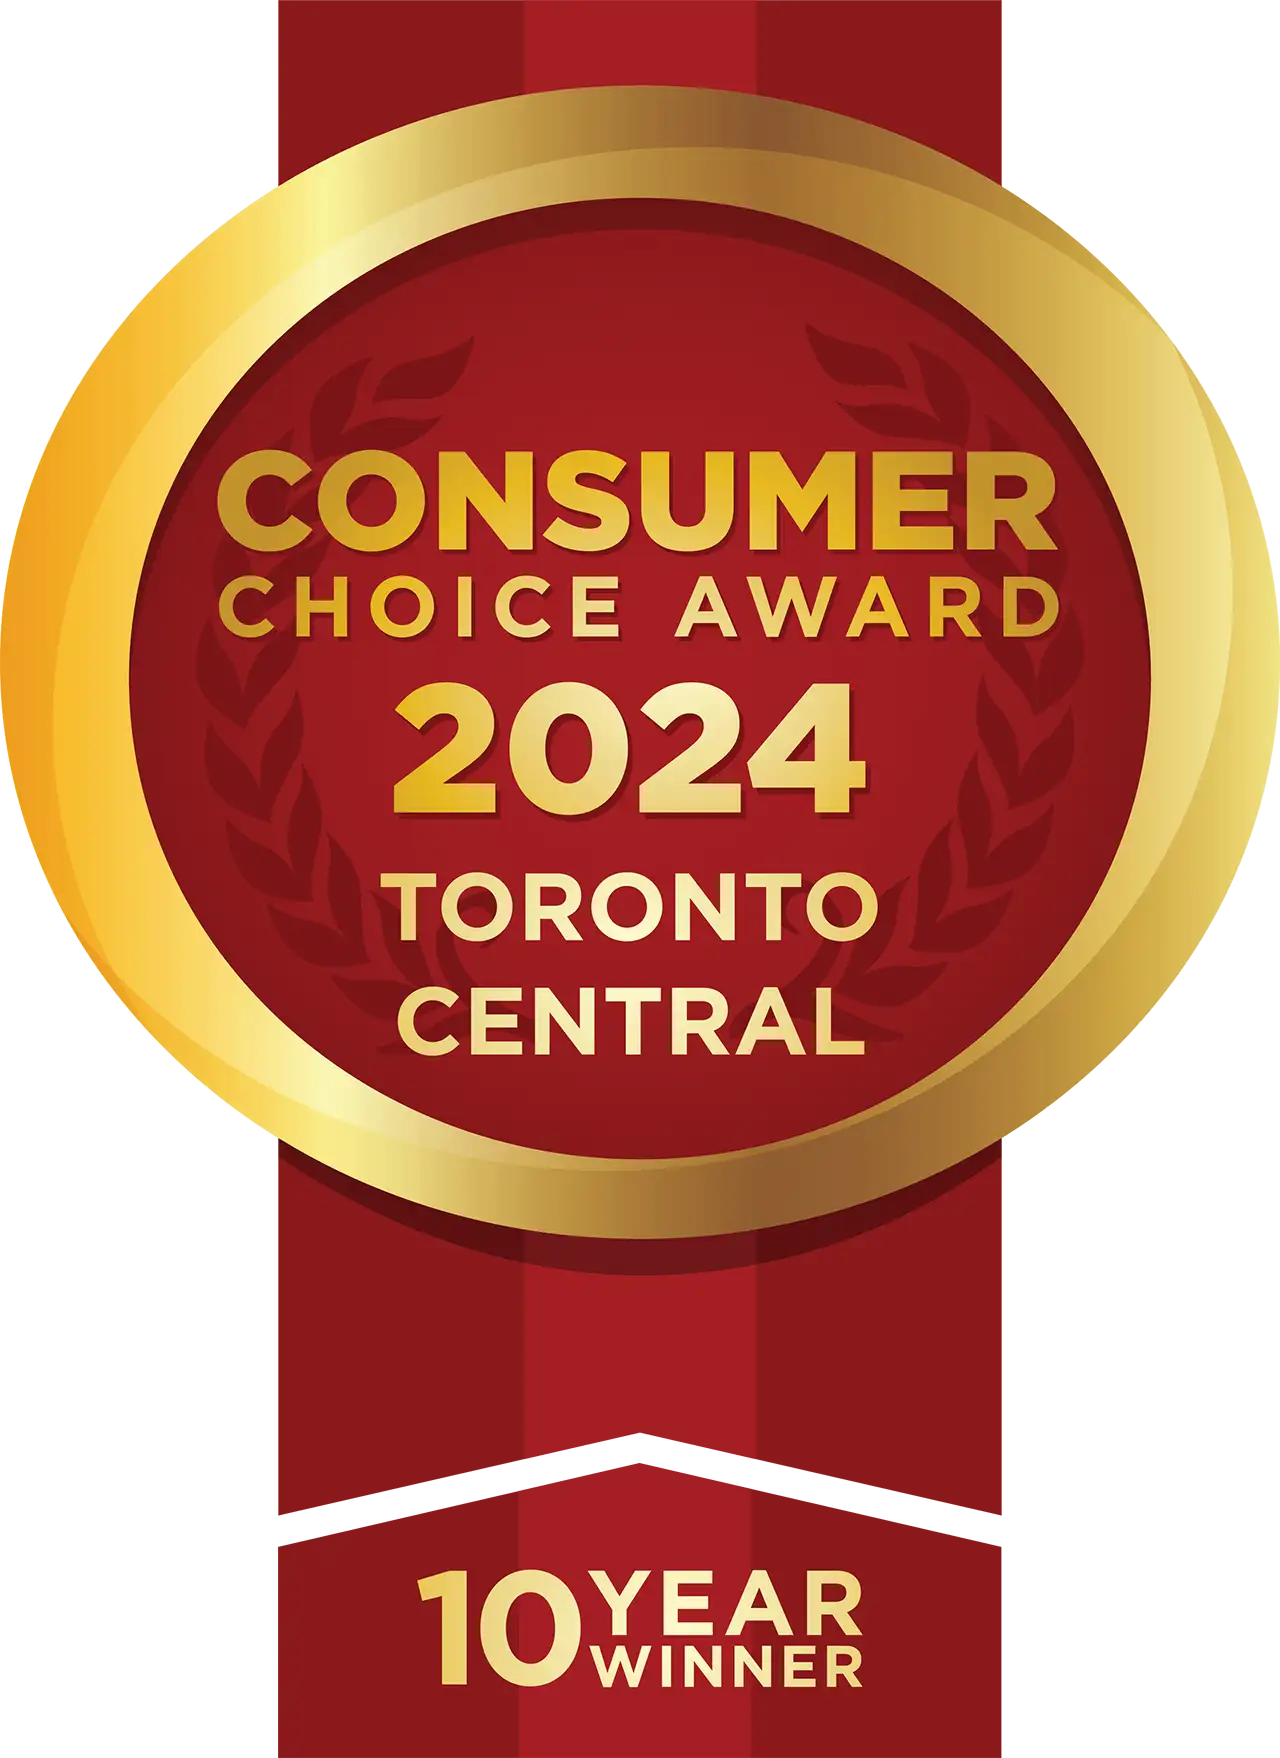 Toronto Central Award 9 years